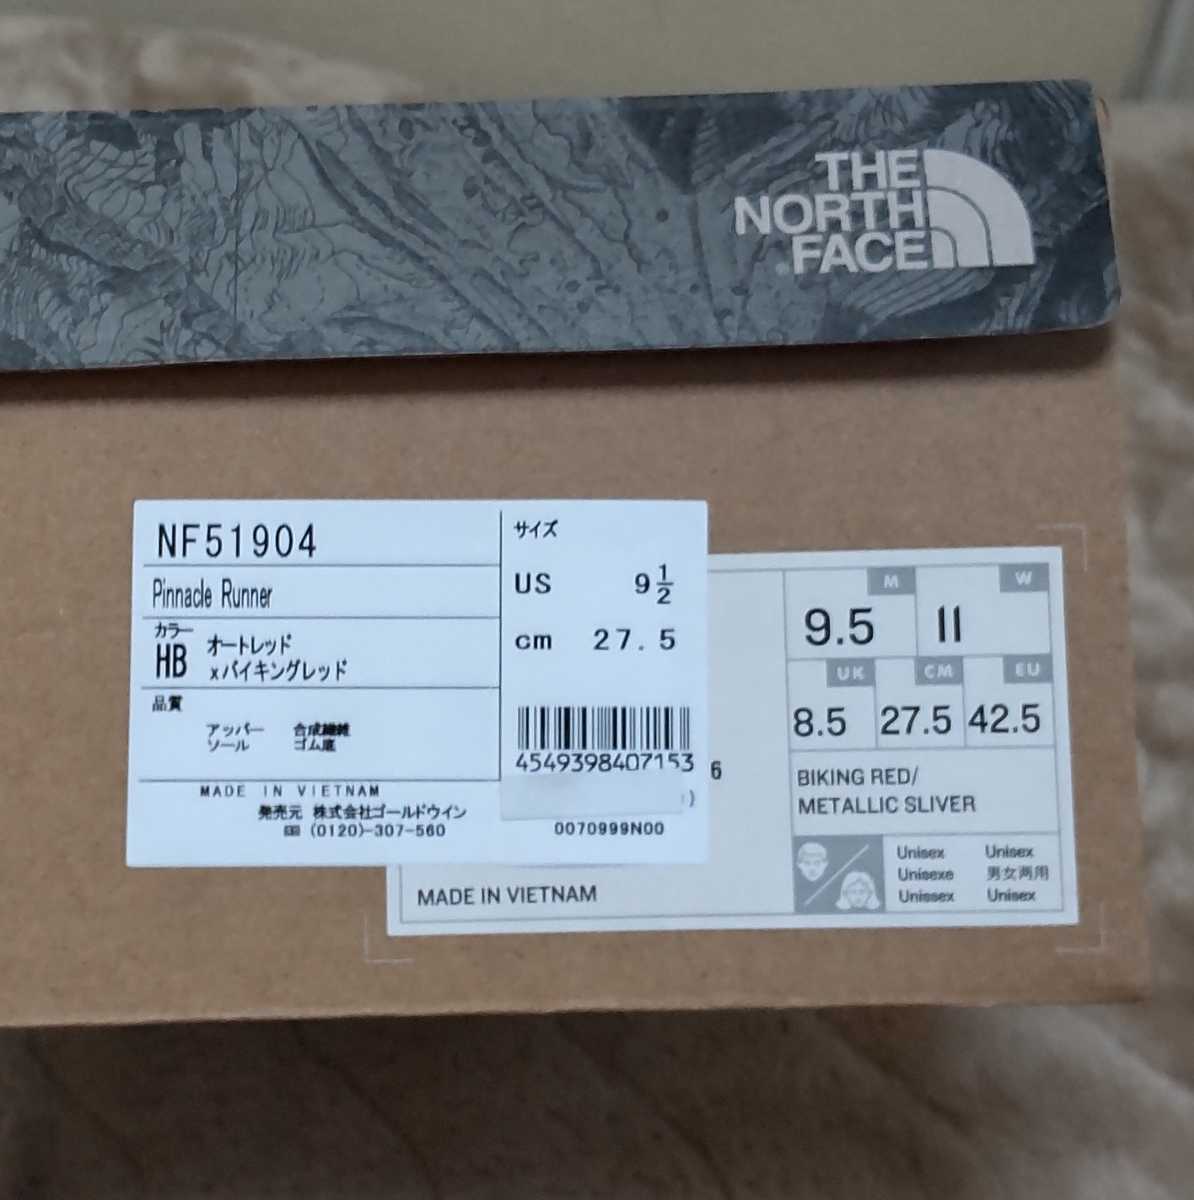 THE NORTH FACE ノースフェイス Pinnacle Runner スニーカー オートレッド×バイキングレッド NF51904 OUTDOOR 人気 27.5cm 定価15,400円